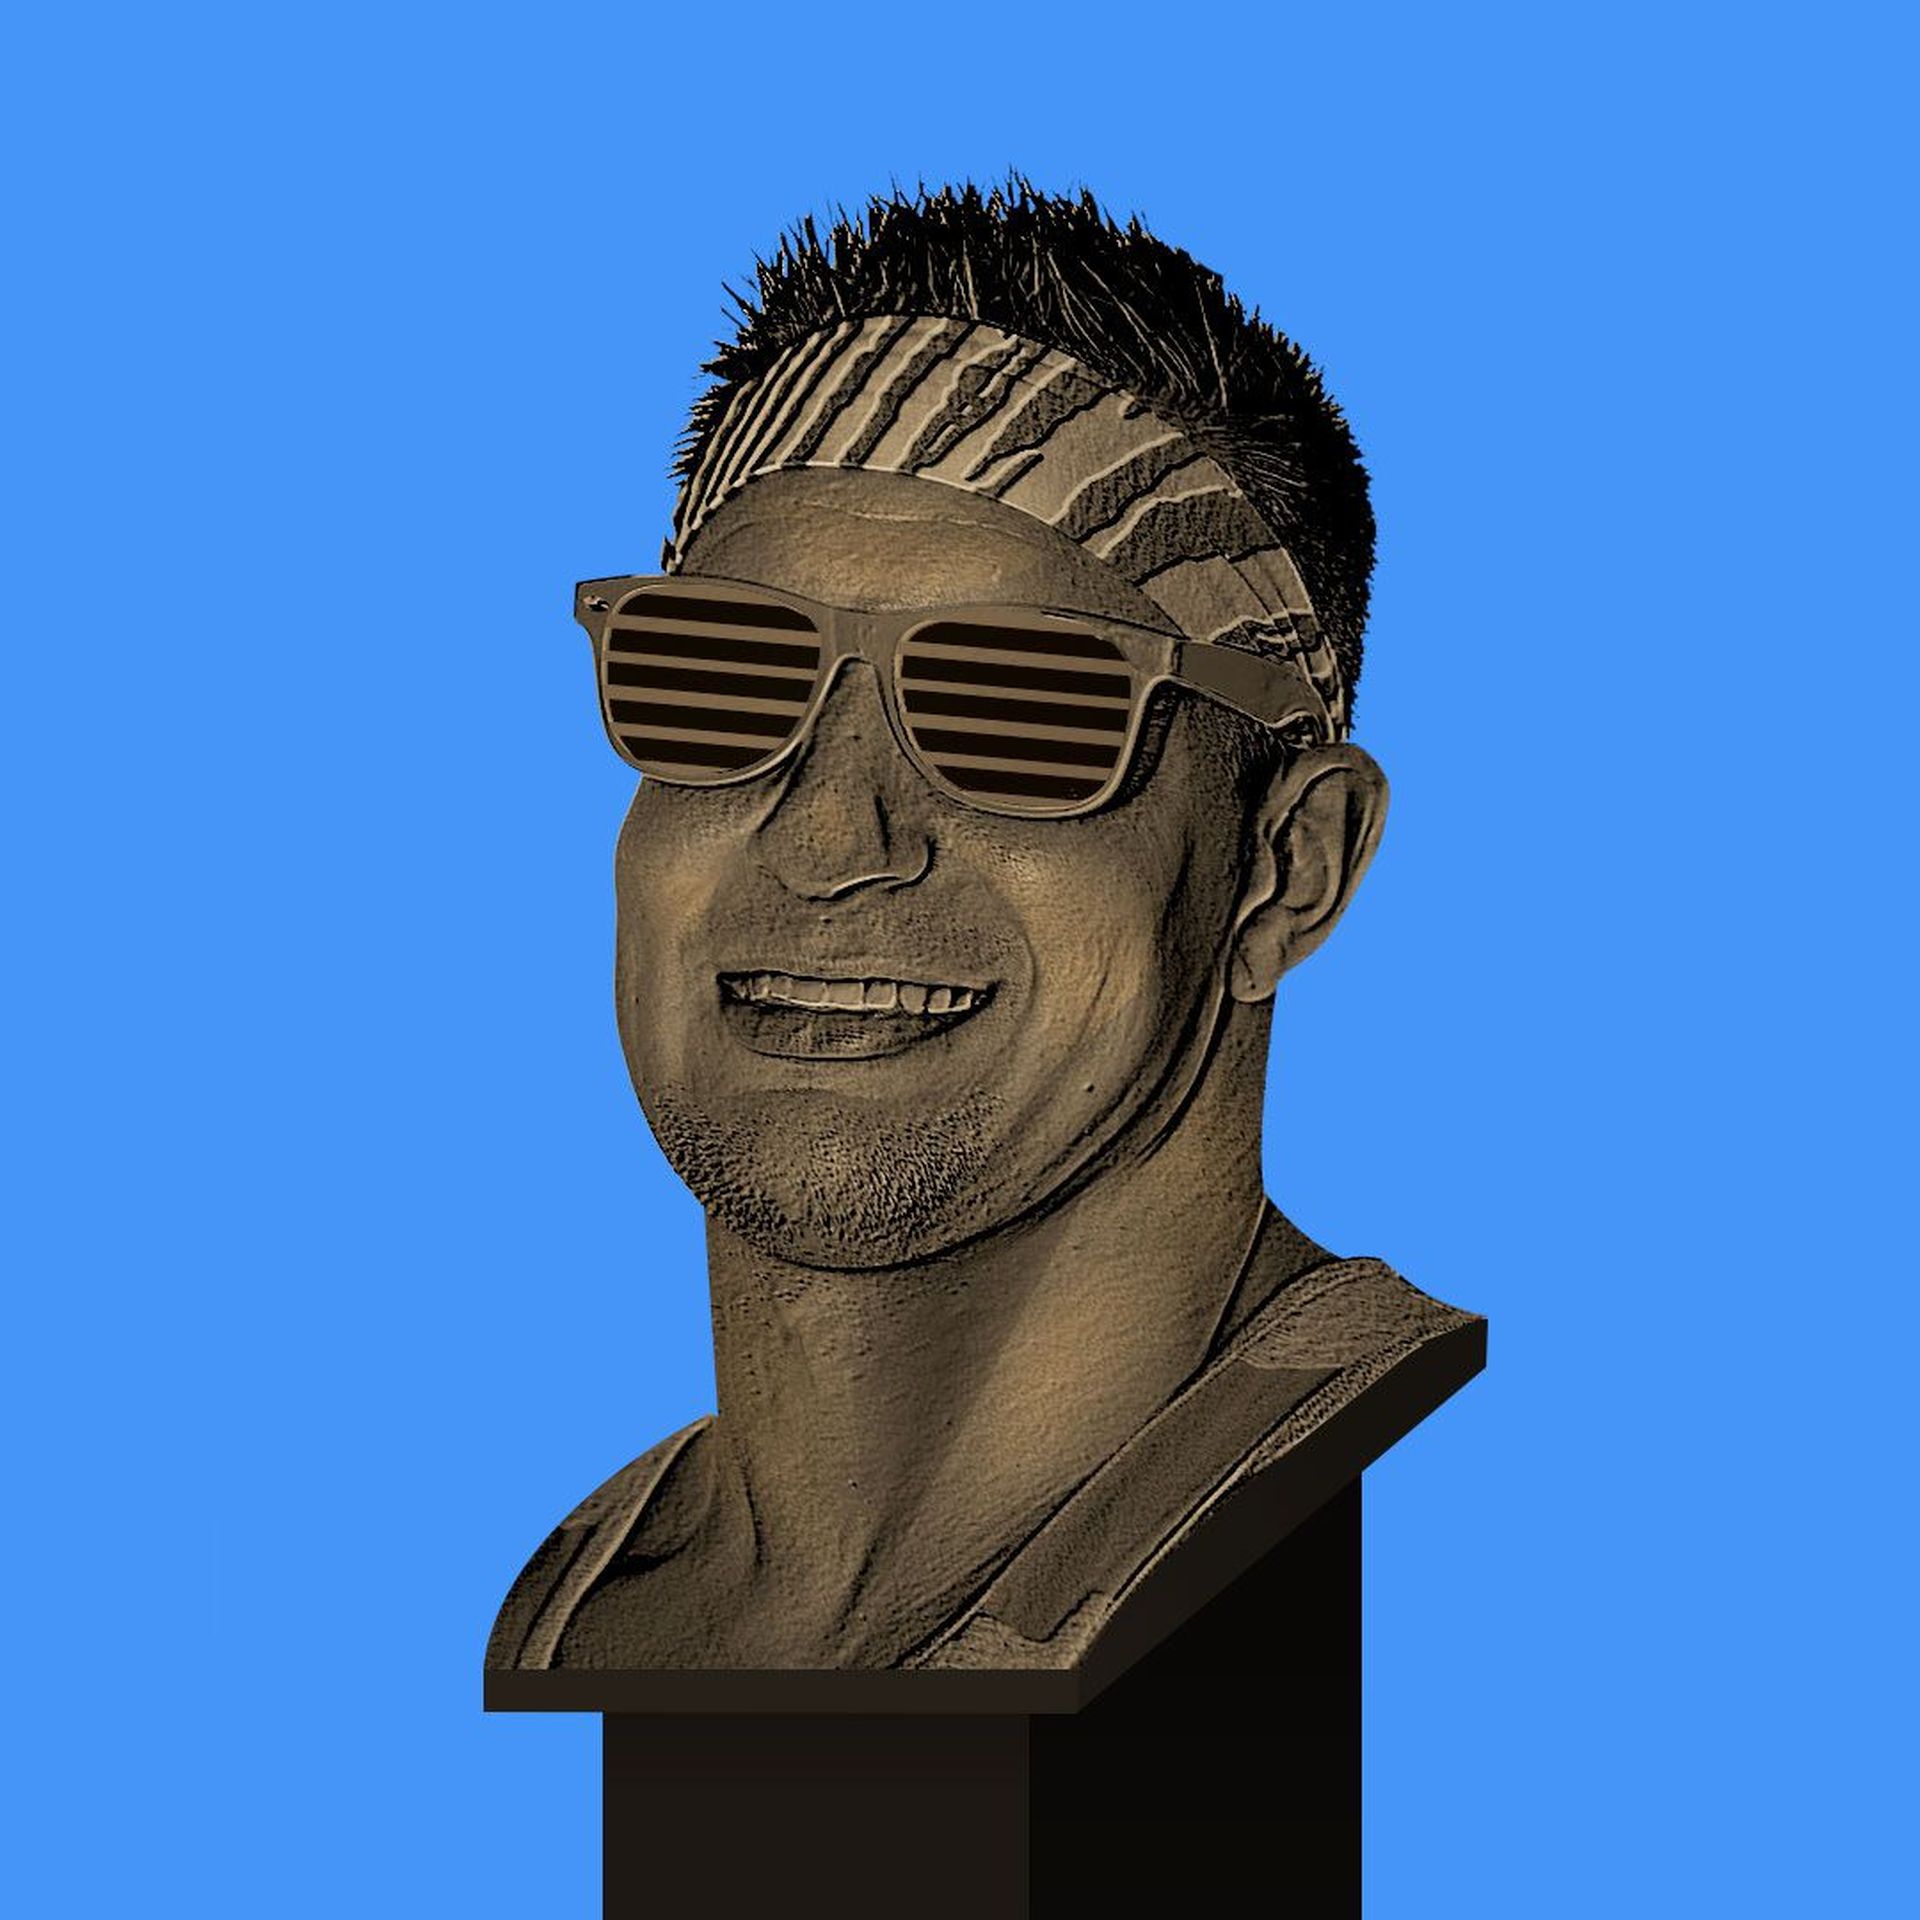 Rob Gronkowski’s football HOF bust with sunglasses and bandana